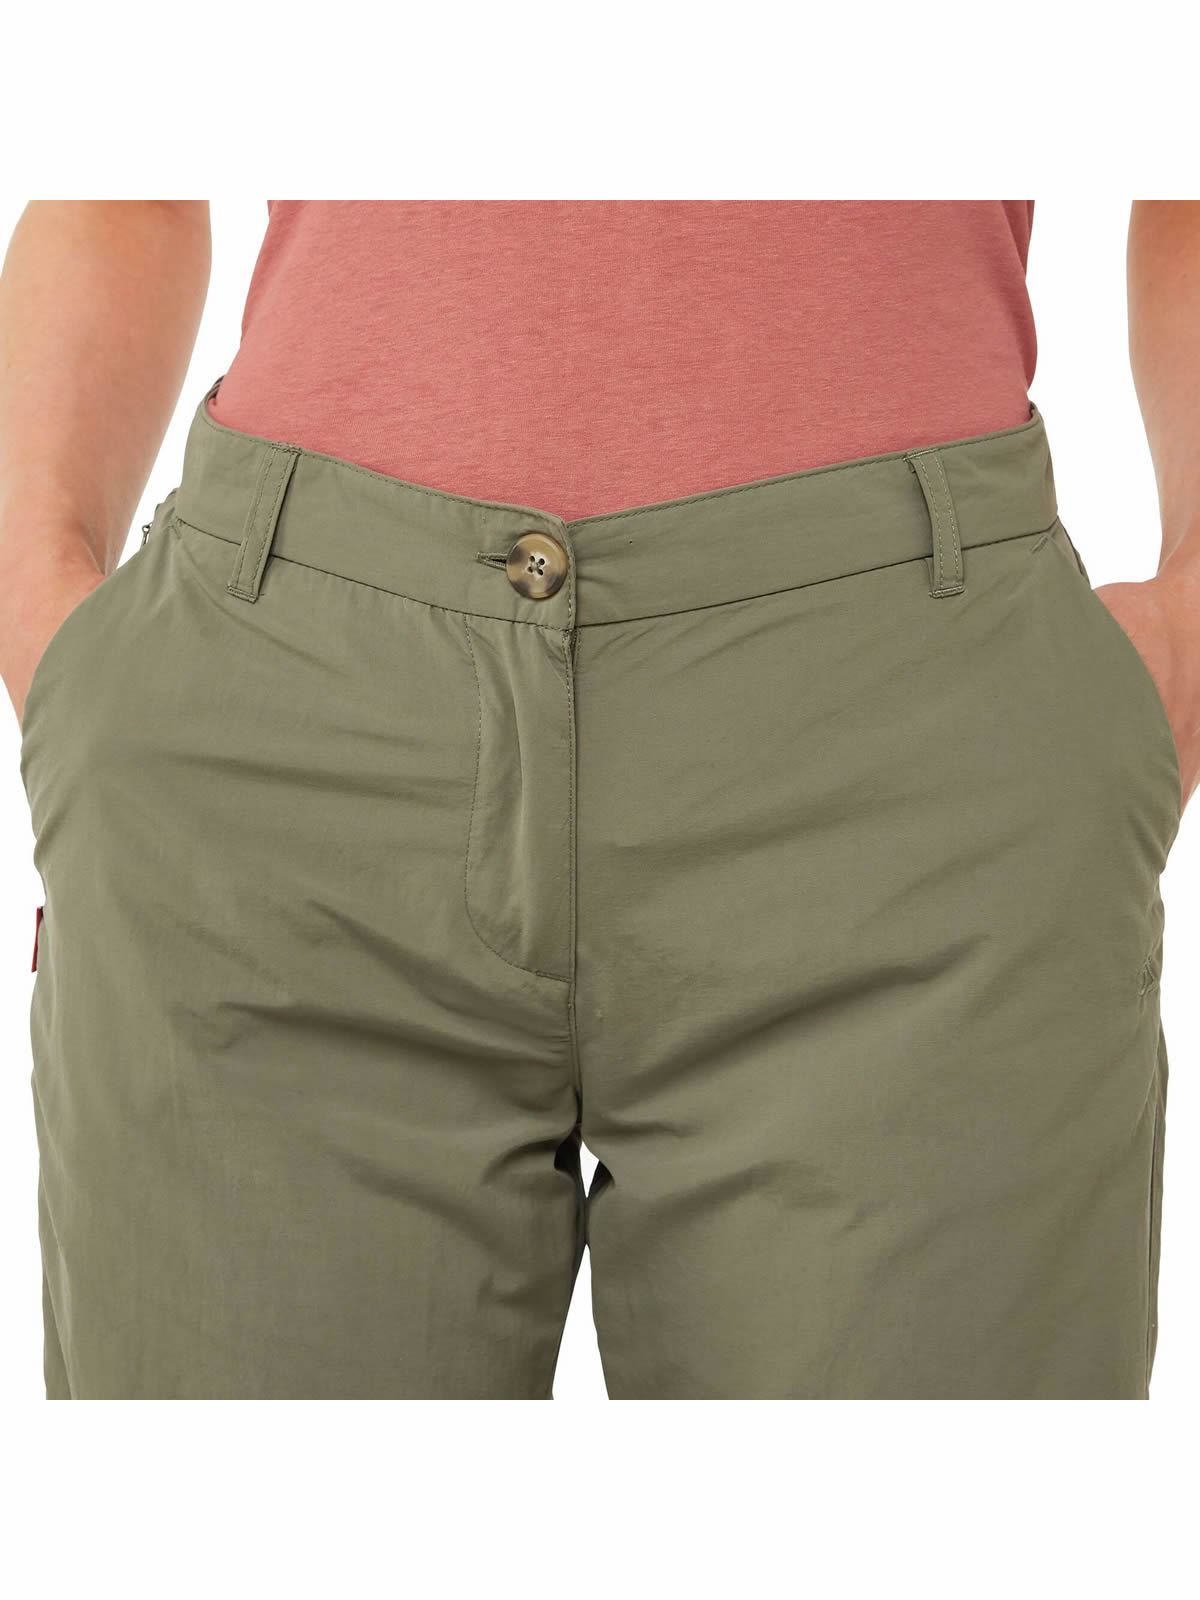 Mens Convertible Pants Durable Zip Off Cargo Combat Cotton Trousers Shorts  Camo Blue 36  Amazonin Clothing  Accessories